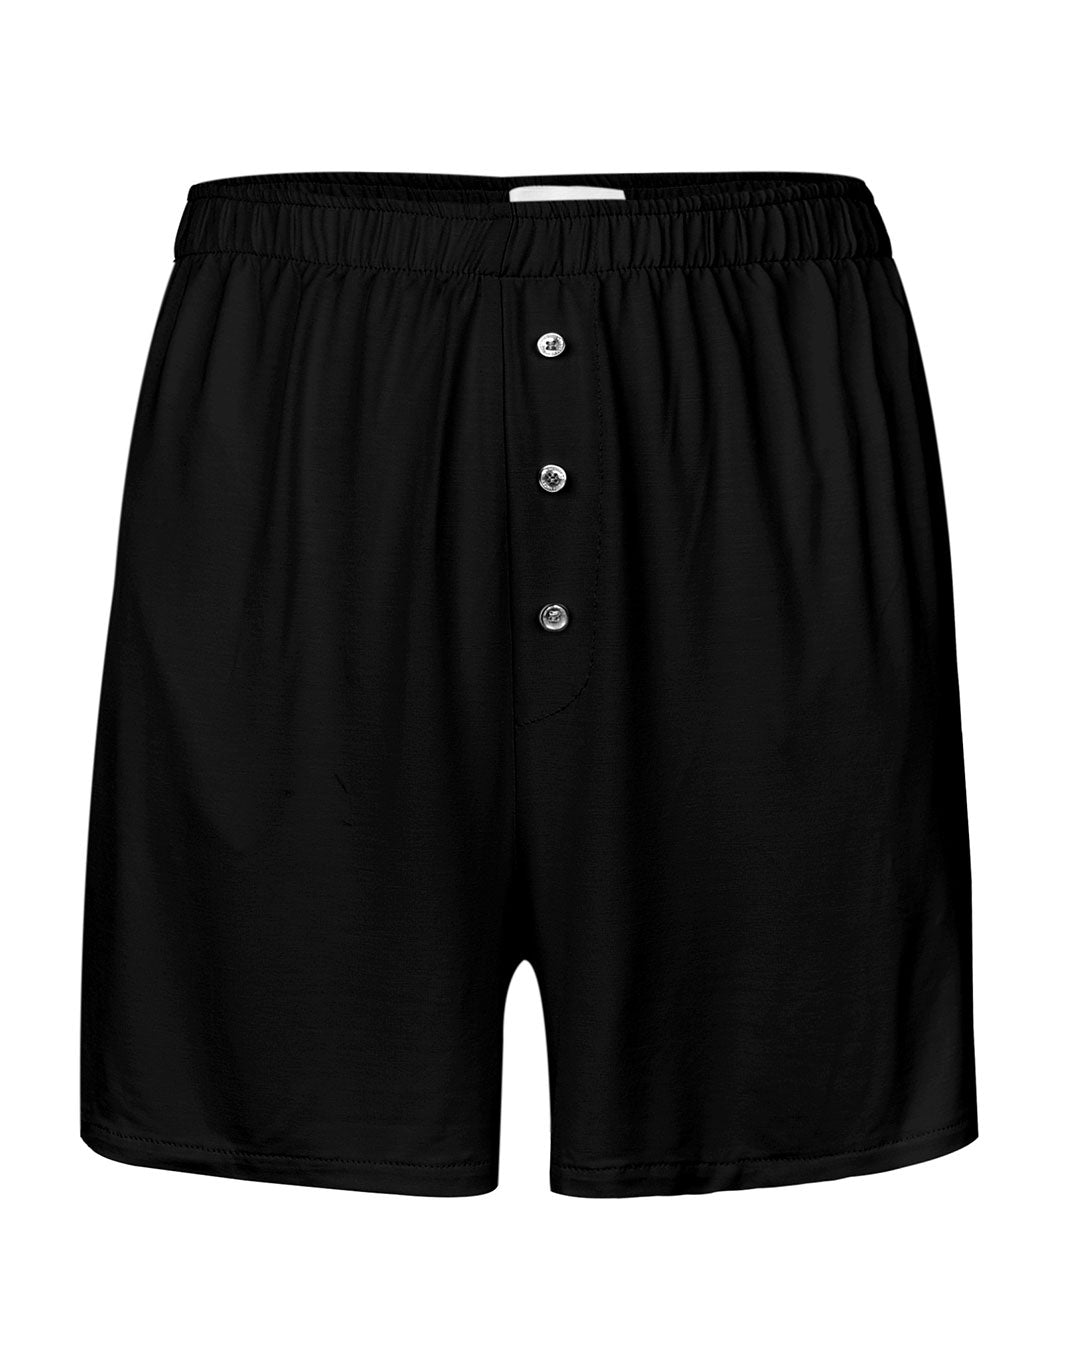 Bamboo Boxer Shorts - Black